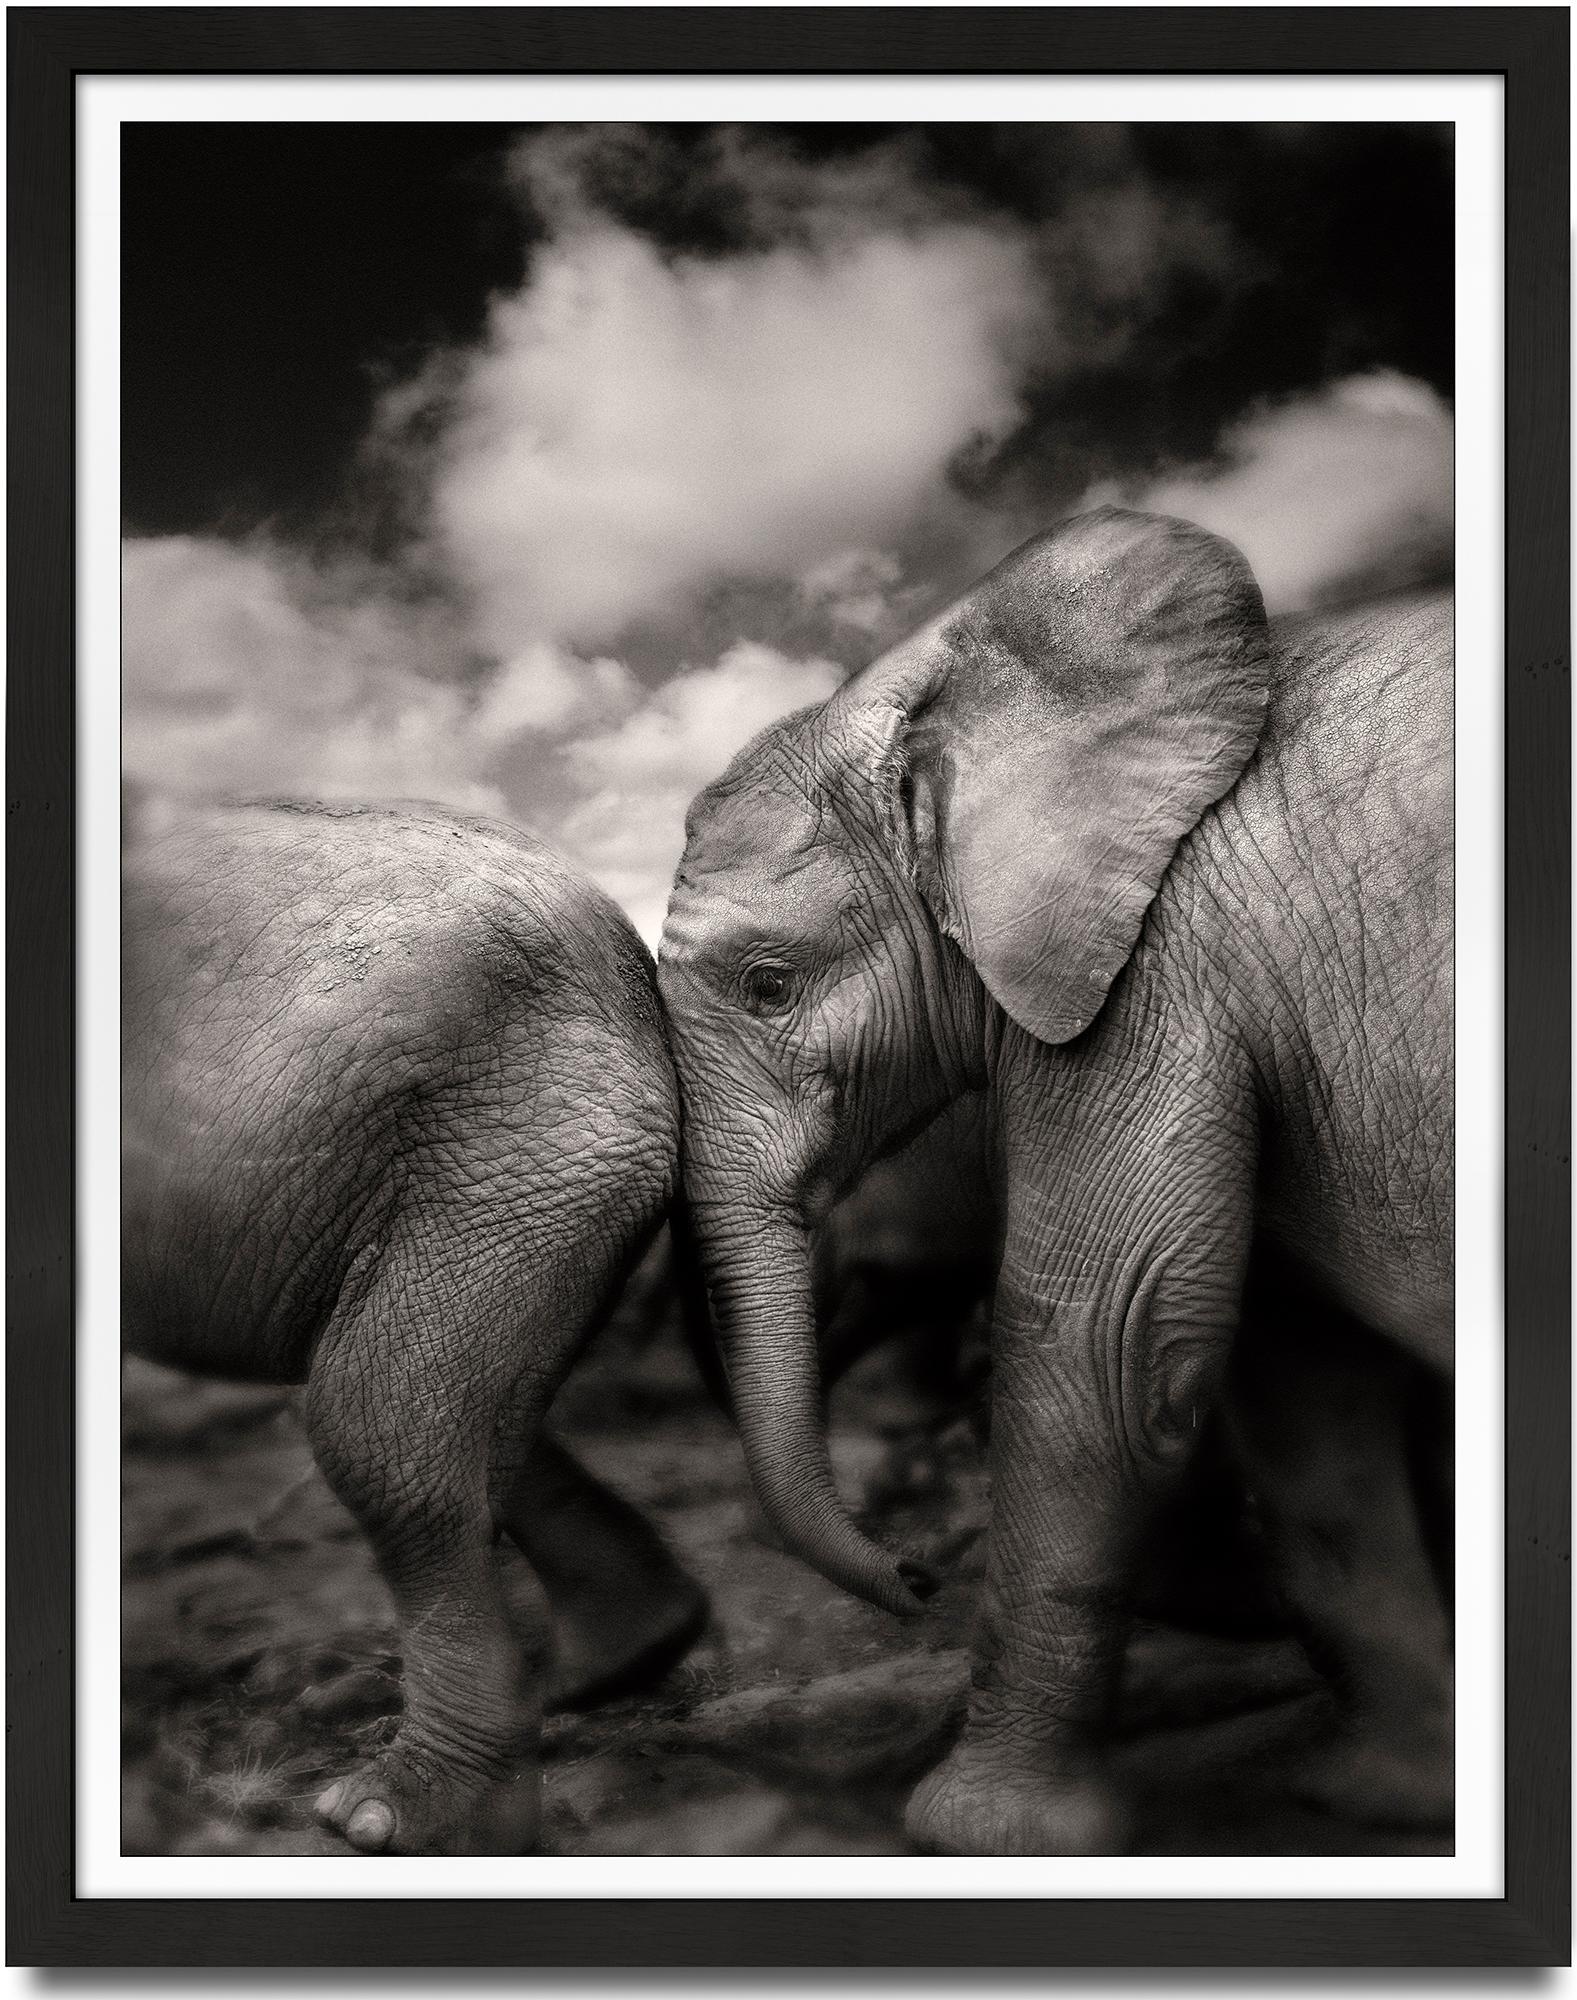 Suguta, Kenya, Elephant, black and white photography, wildlife - Photograph by Joachim Schmeisser